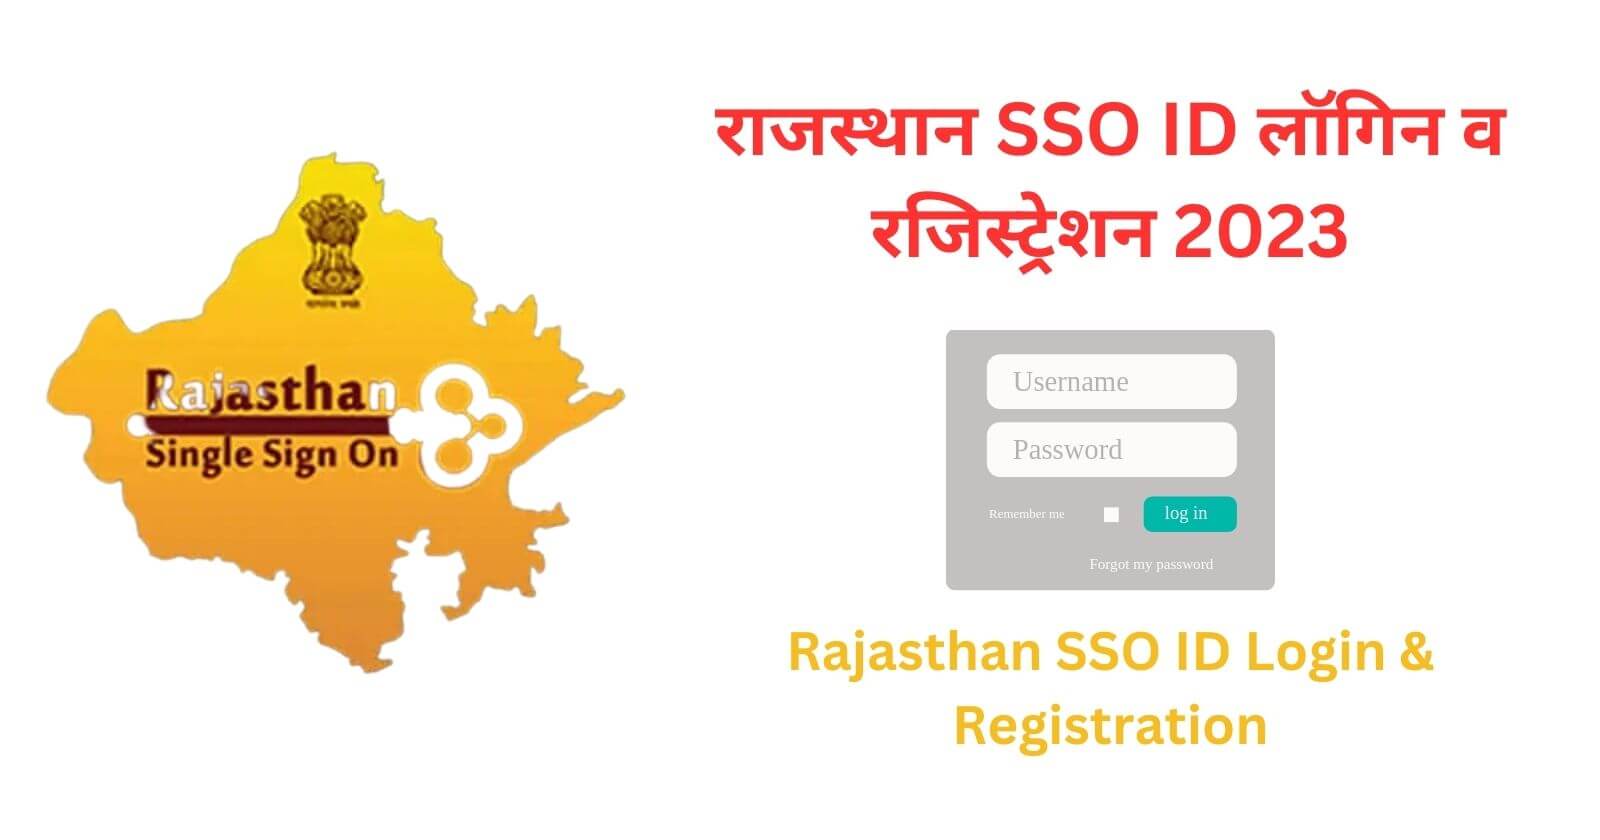 Rajasthan SSO ID Login, Registration 2023